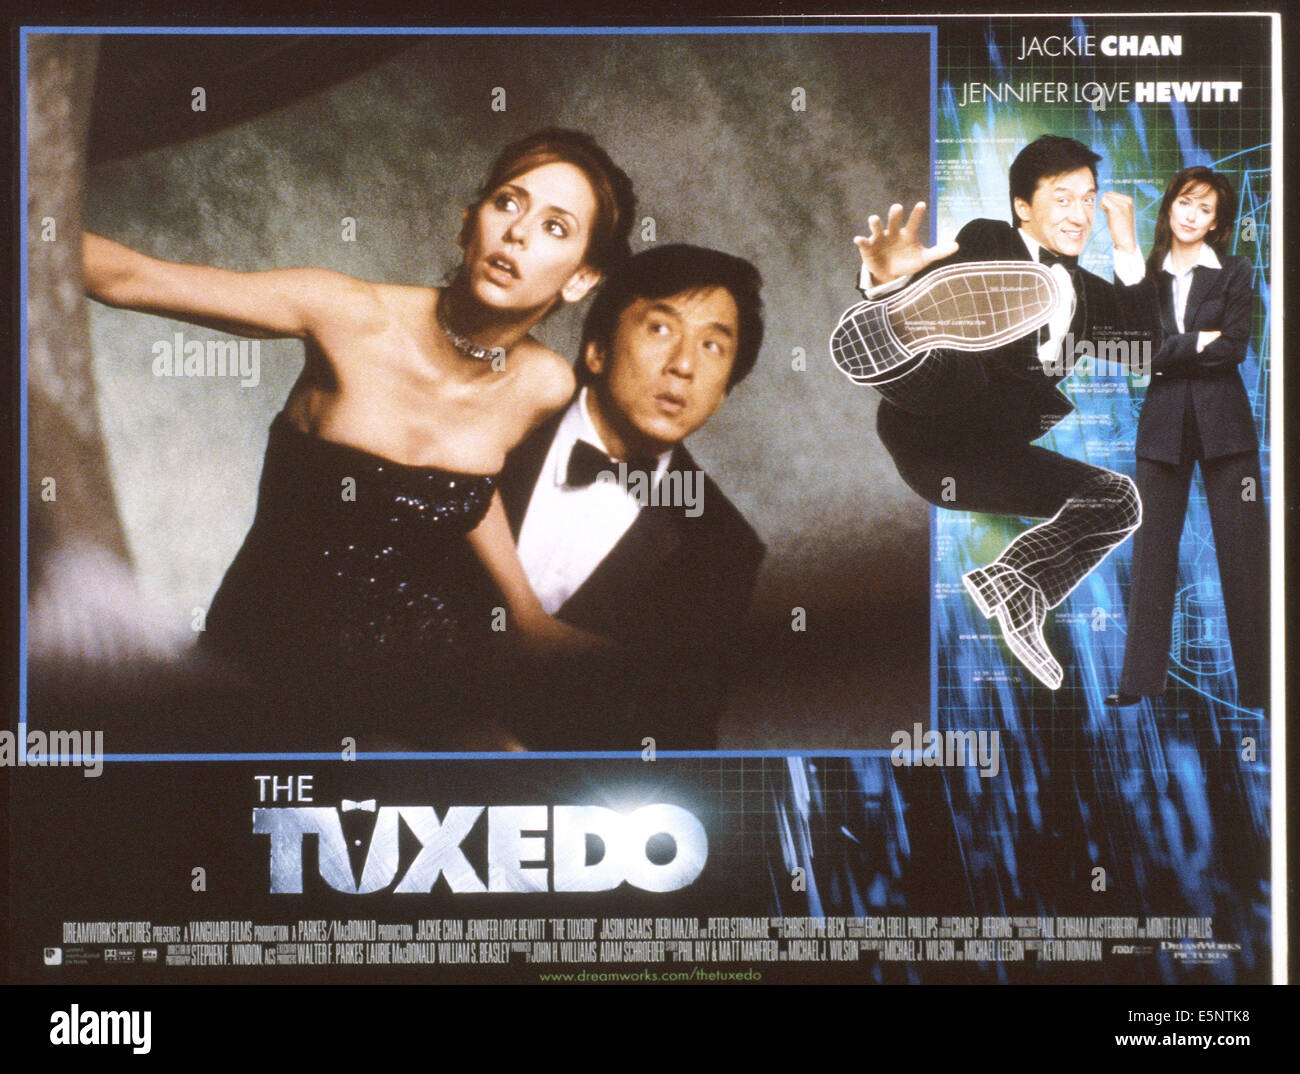 THE TUXEDO, US lobbycard, from left: Jennifer Love Hewitt, Jackie Chan (twice), Jennifer Love Hewitt, 2002, © Stock Photo